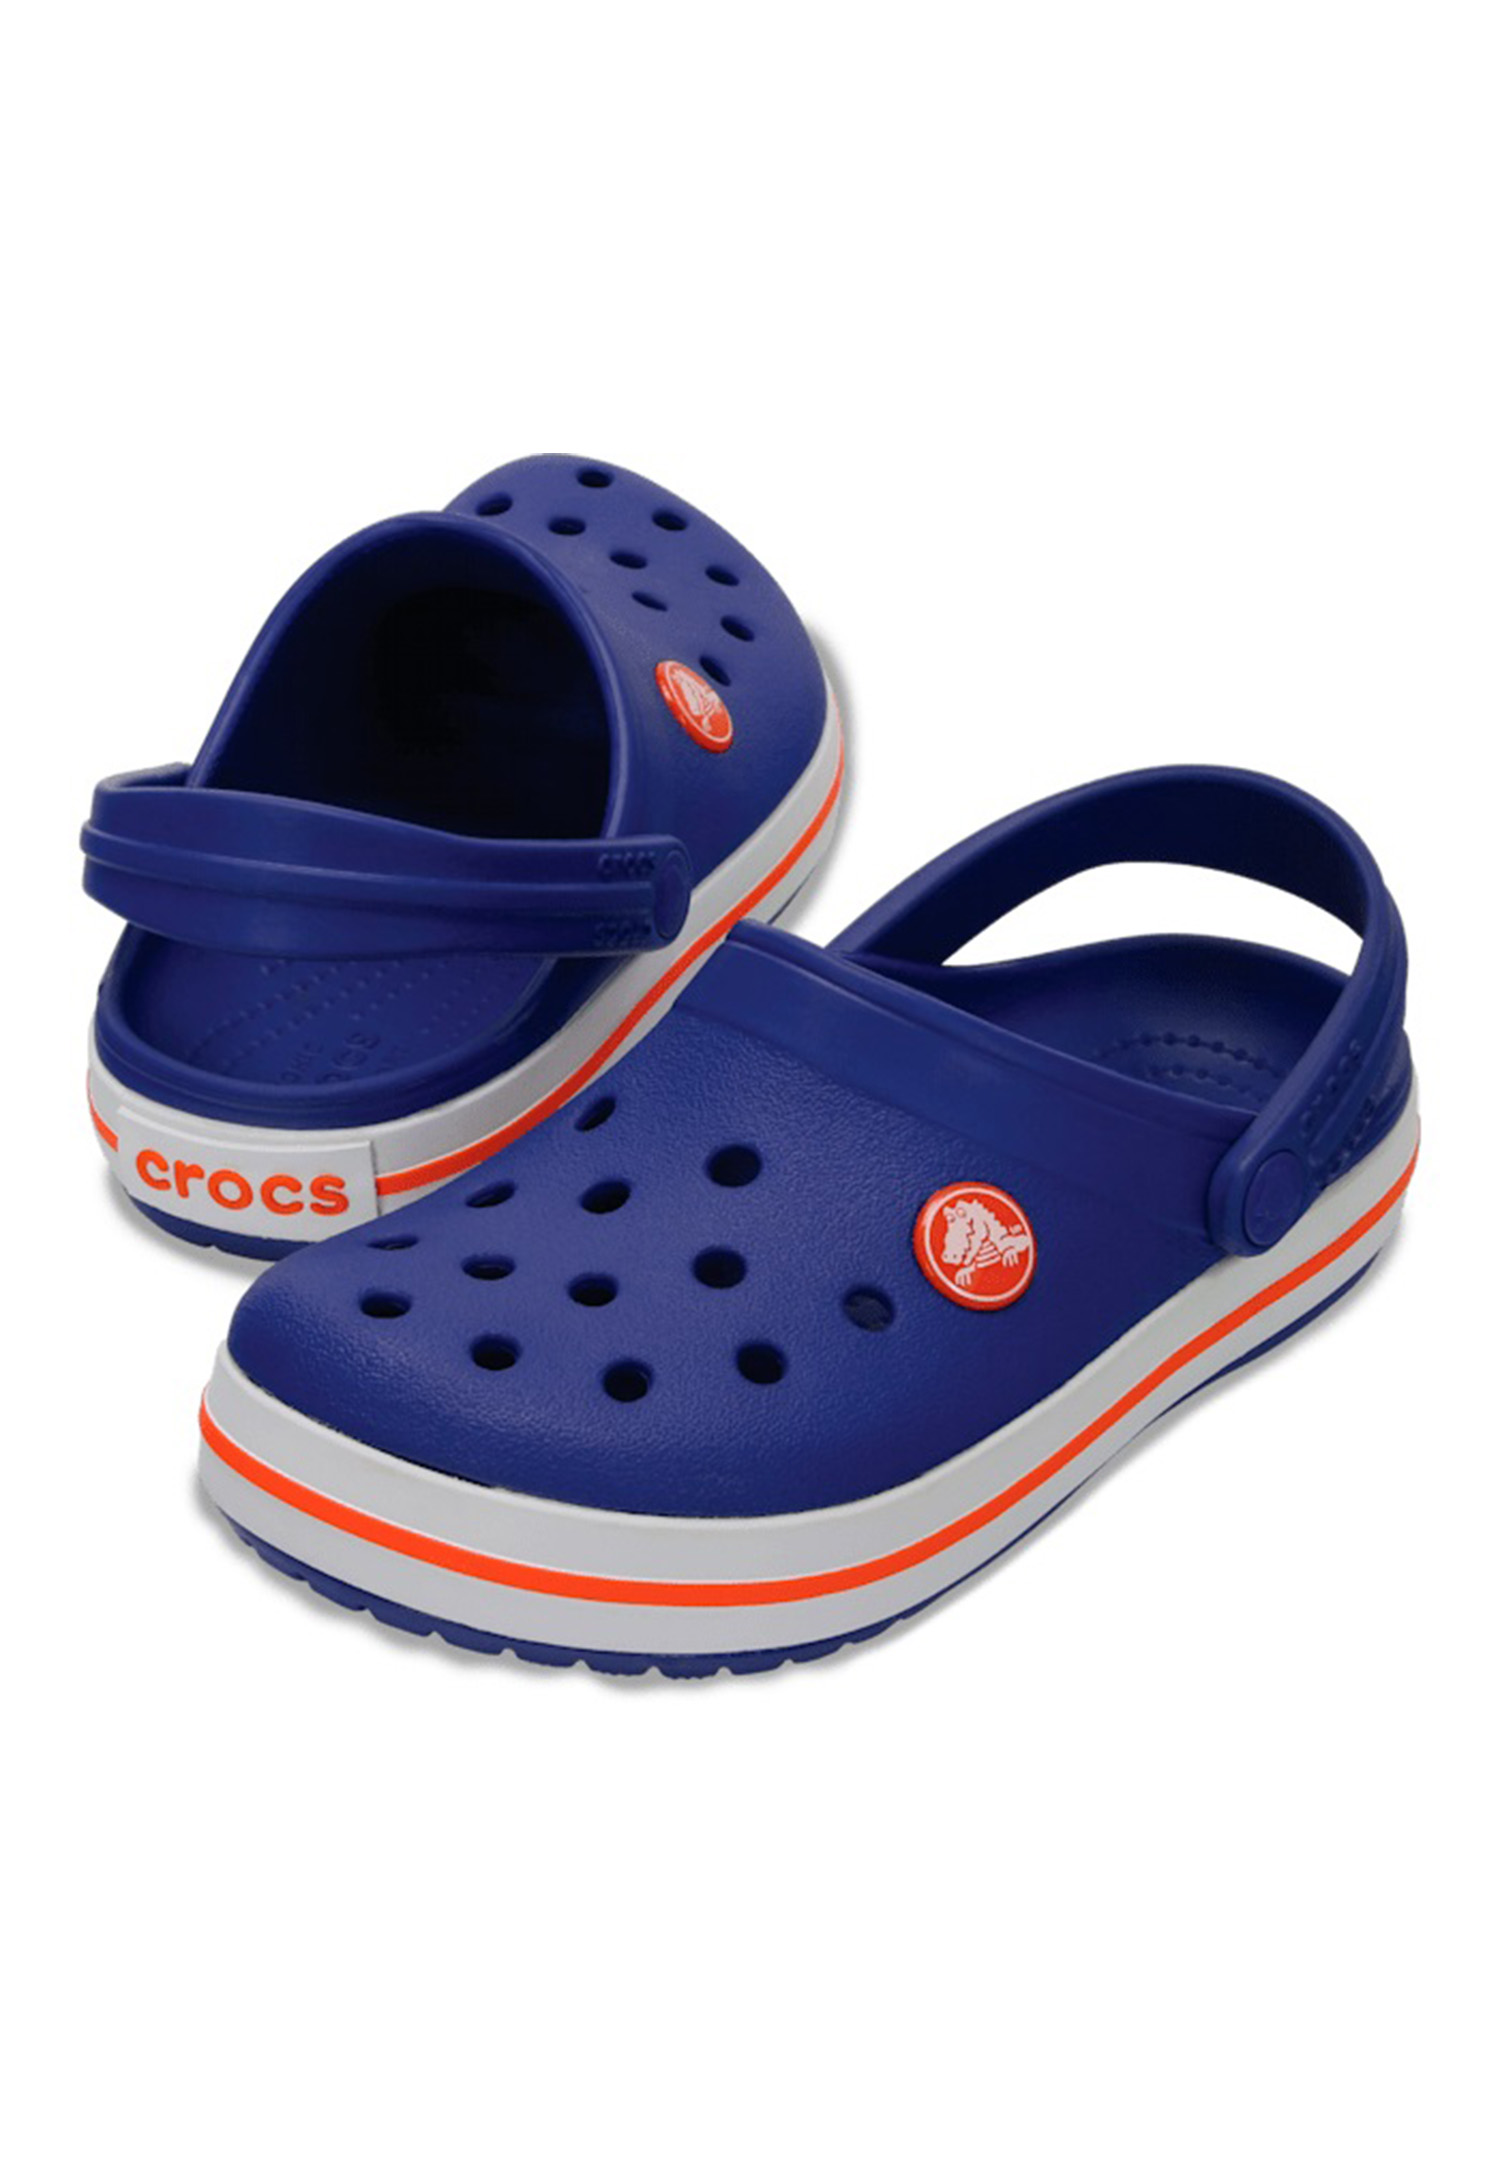 Crocs Kids Crocband Clog Unisex Kinder Schuhe Sandalen 207006 Blau